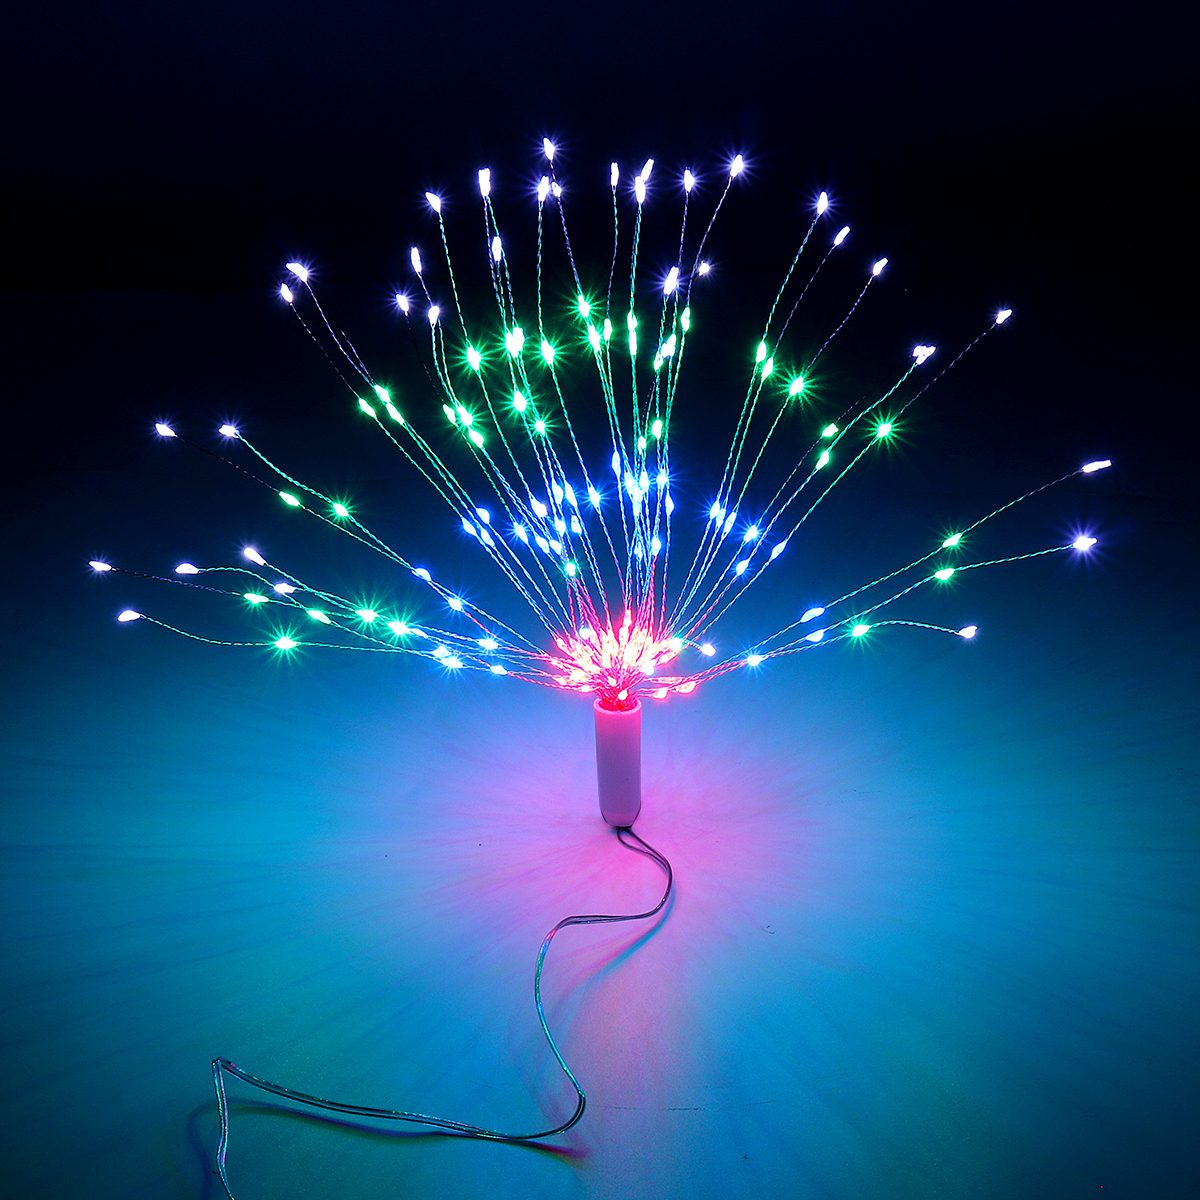 USB-Powered-8-Mode-150-LED-DIY-Firework-Starburst-Fairy-String-Light-Remote-Control-Christmas-Decor-1378372-9